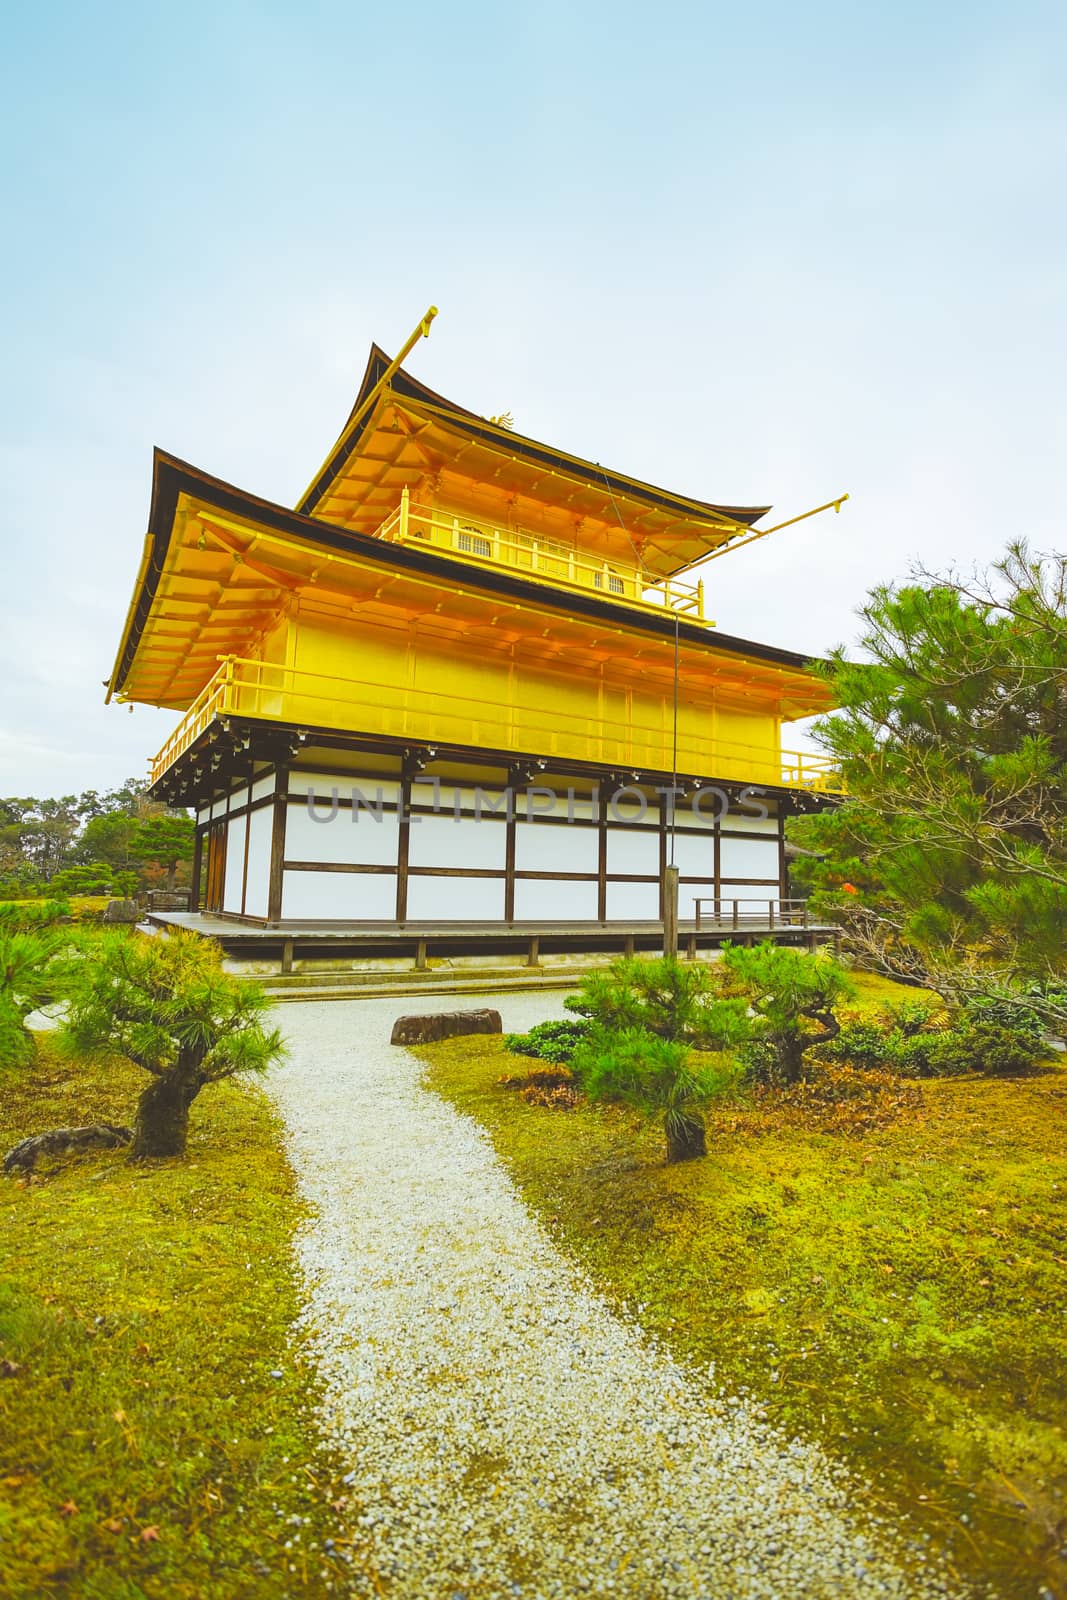 The famous Golden Pavilion in Kinkakuji temple in Kyoto, Japan.